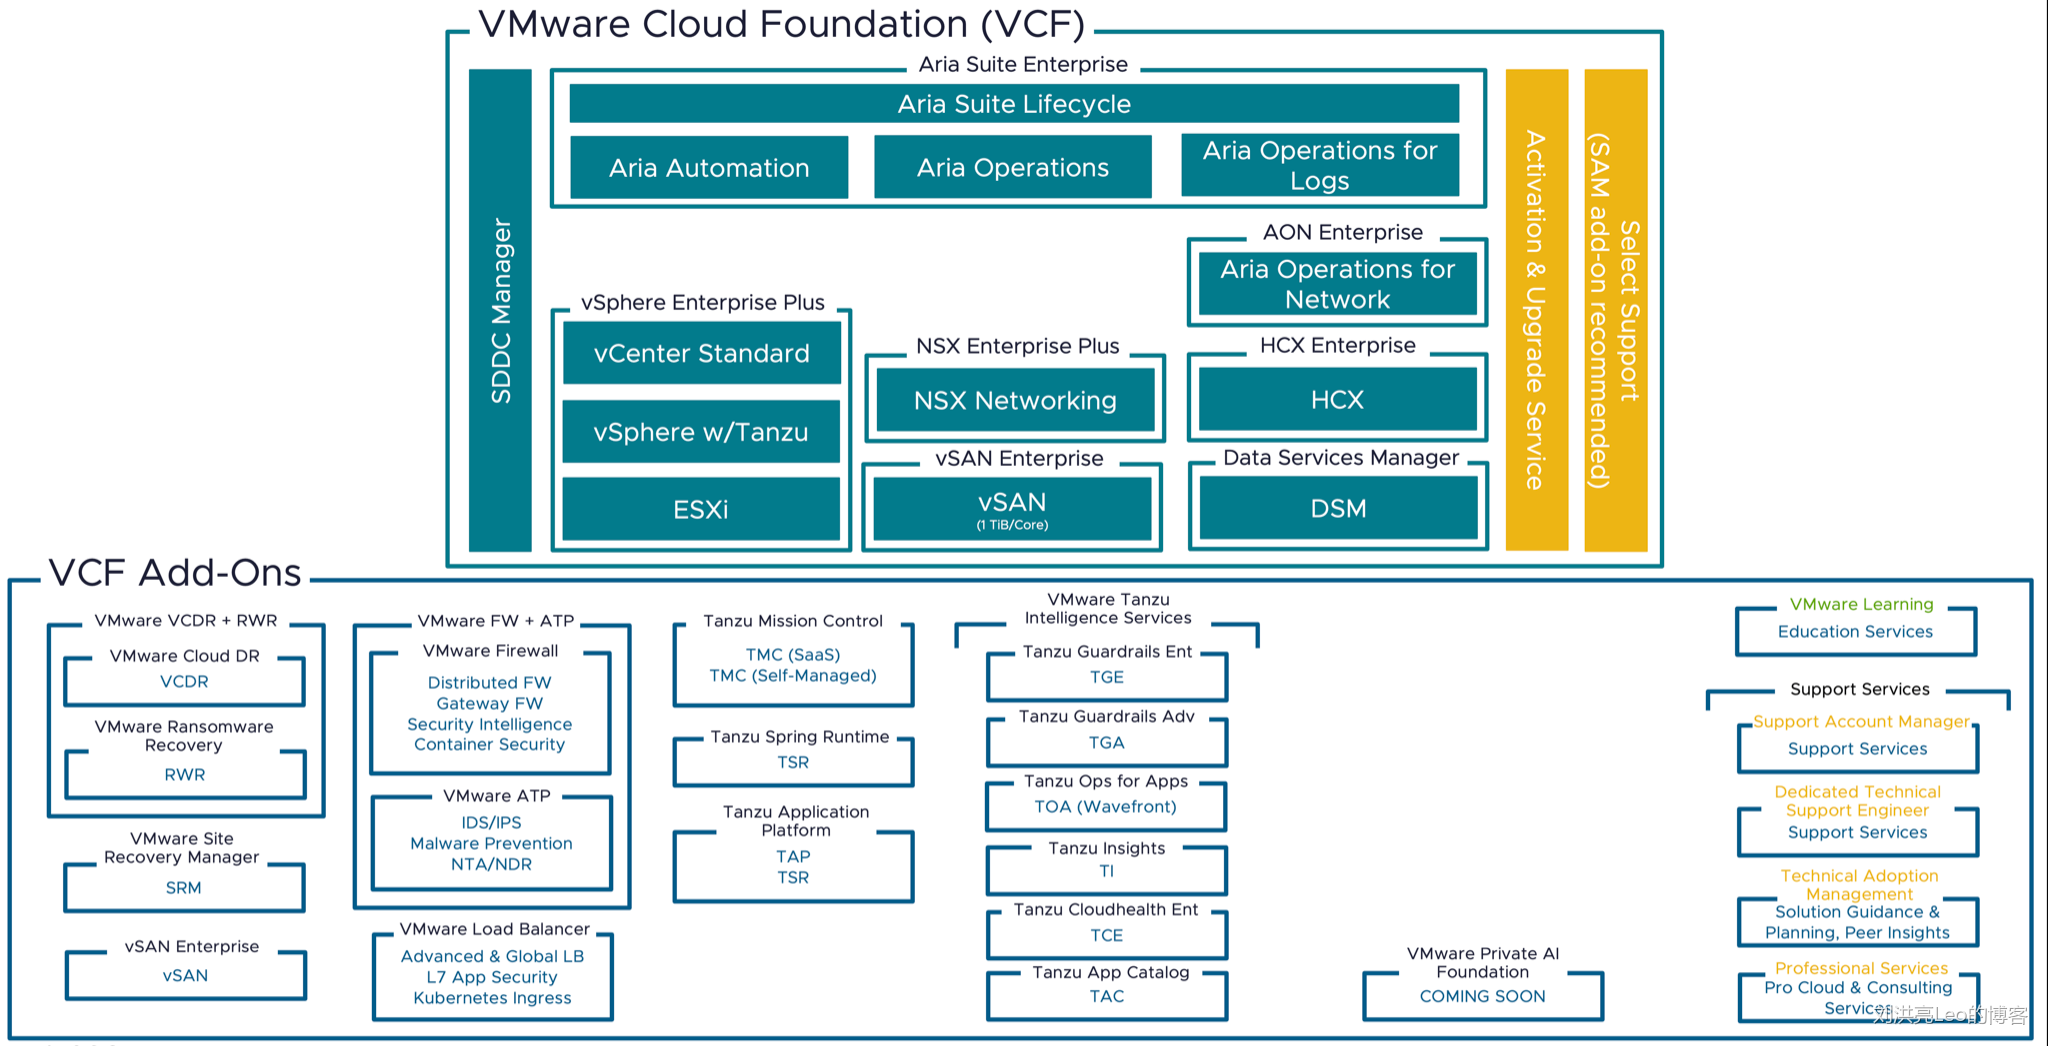 VMware Cloud Foundation (VCF)